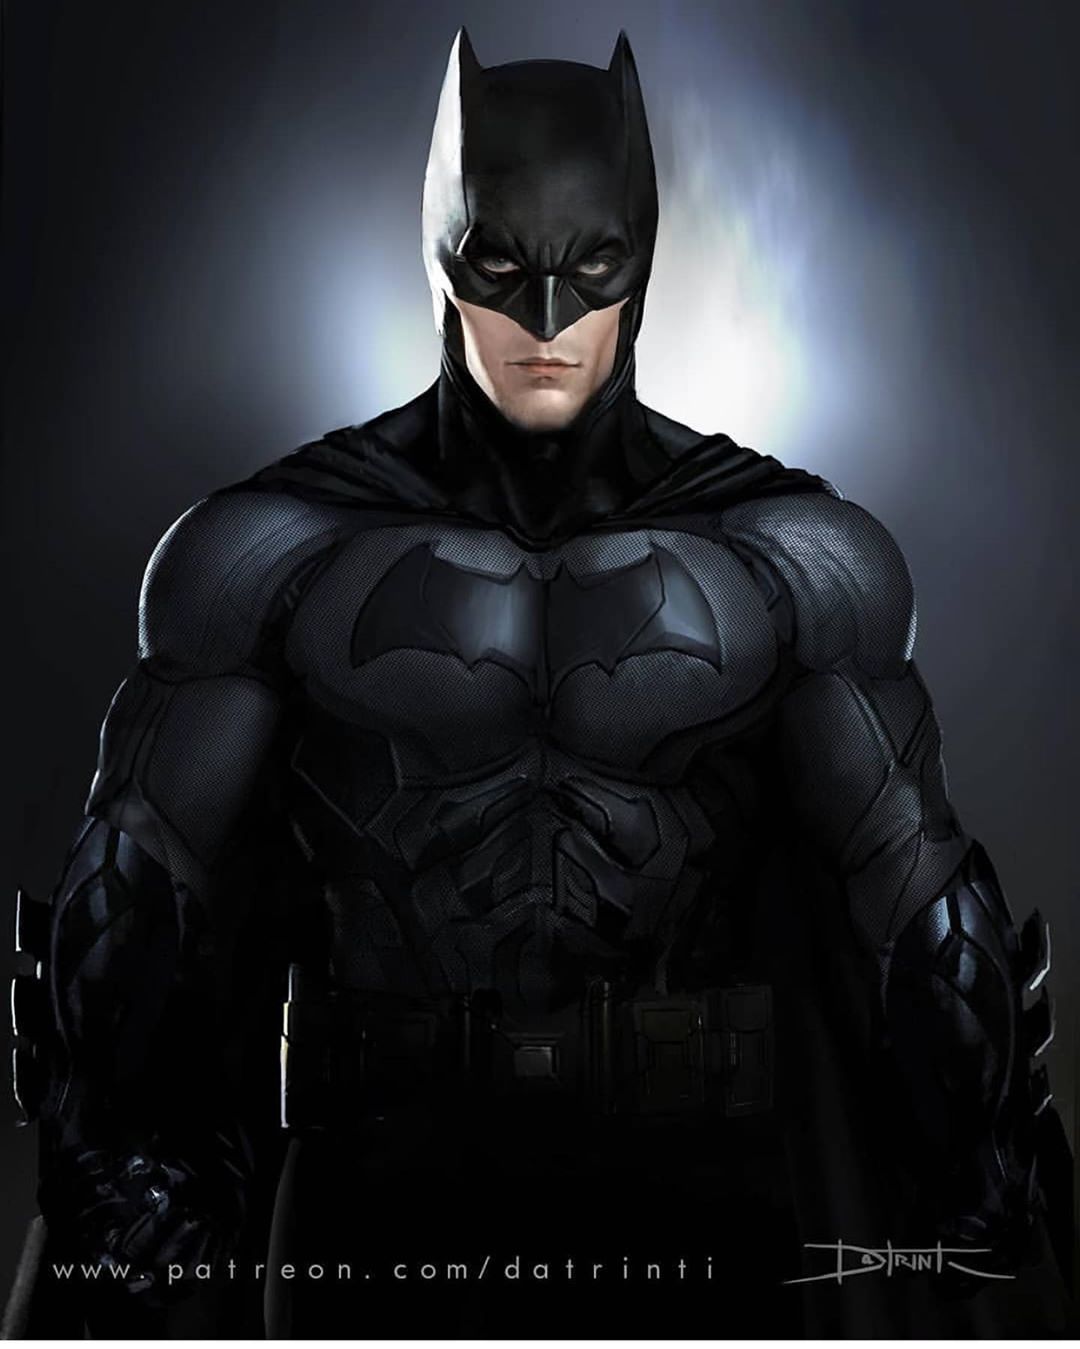 The Batman on Instagram: “Robert Battinson